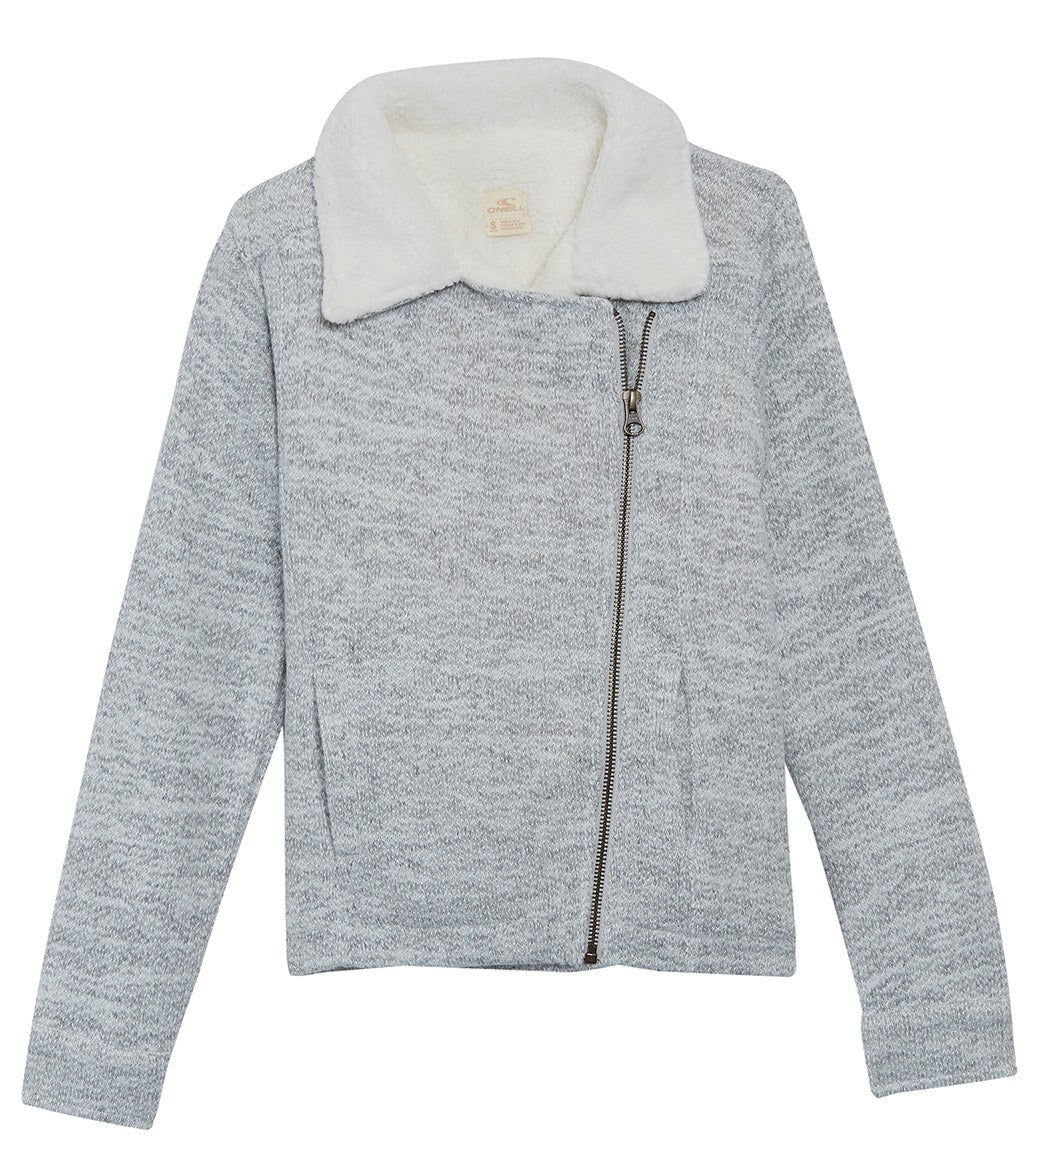 O'neill Girls' Alta Zip Fleece Jacket Big Kid - Heather Grey Sm 7/8 Big Size Small/Medium Acrylic/Cotton/Polyester - Swimoutlet.com